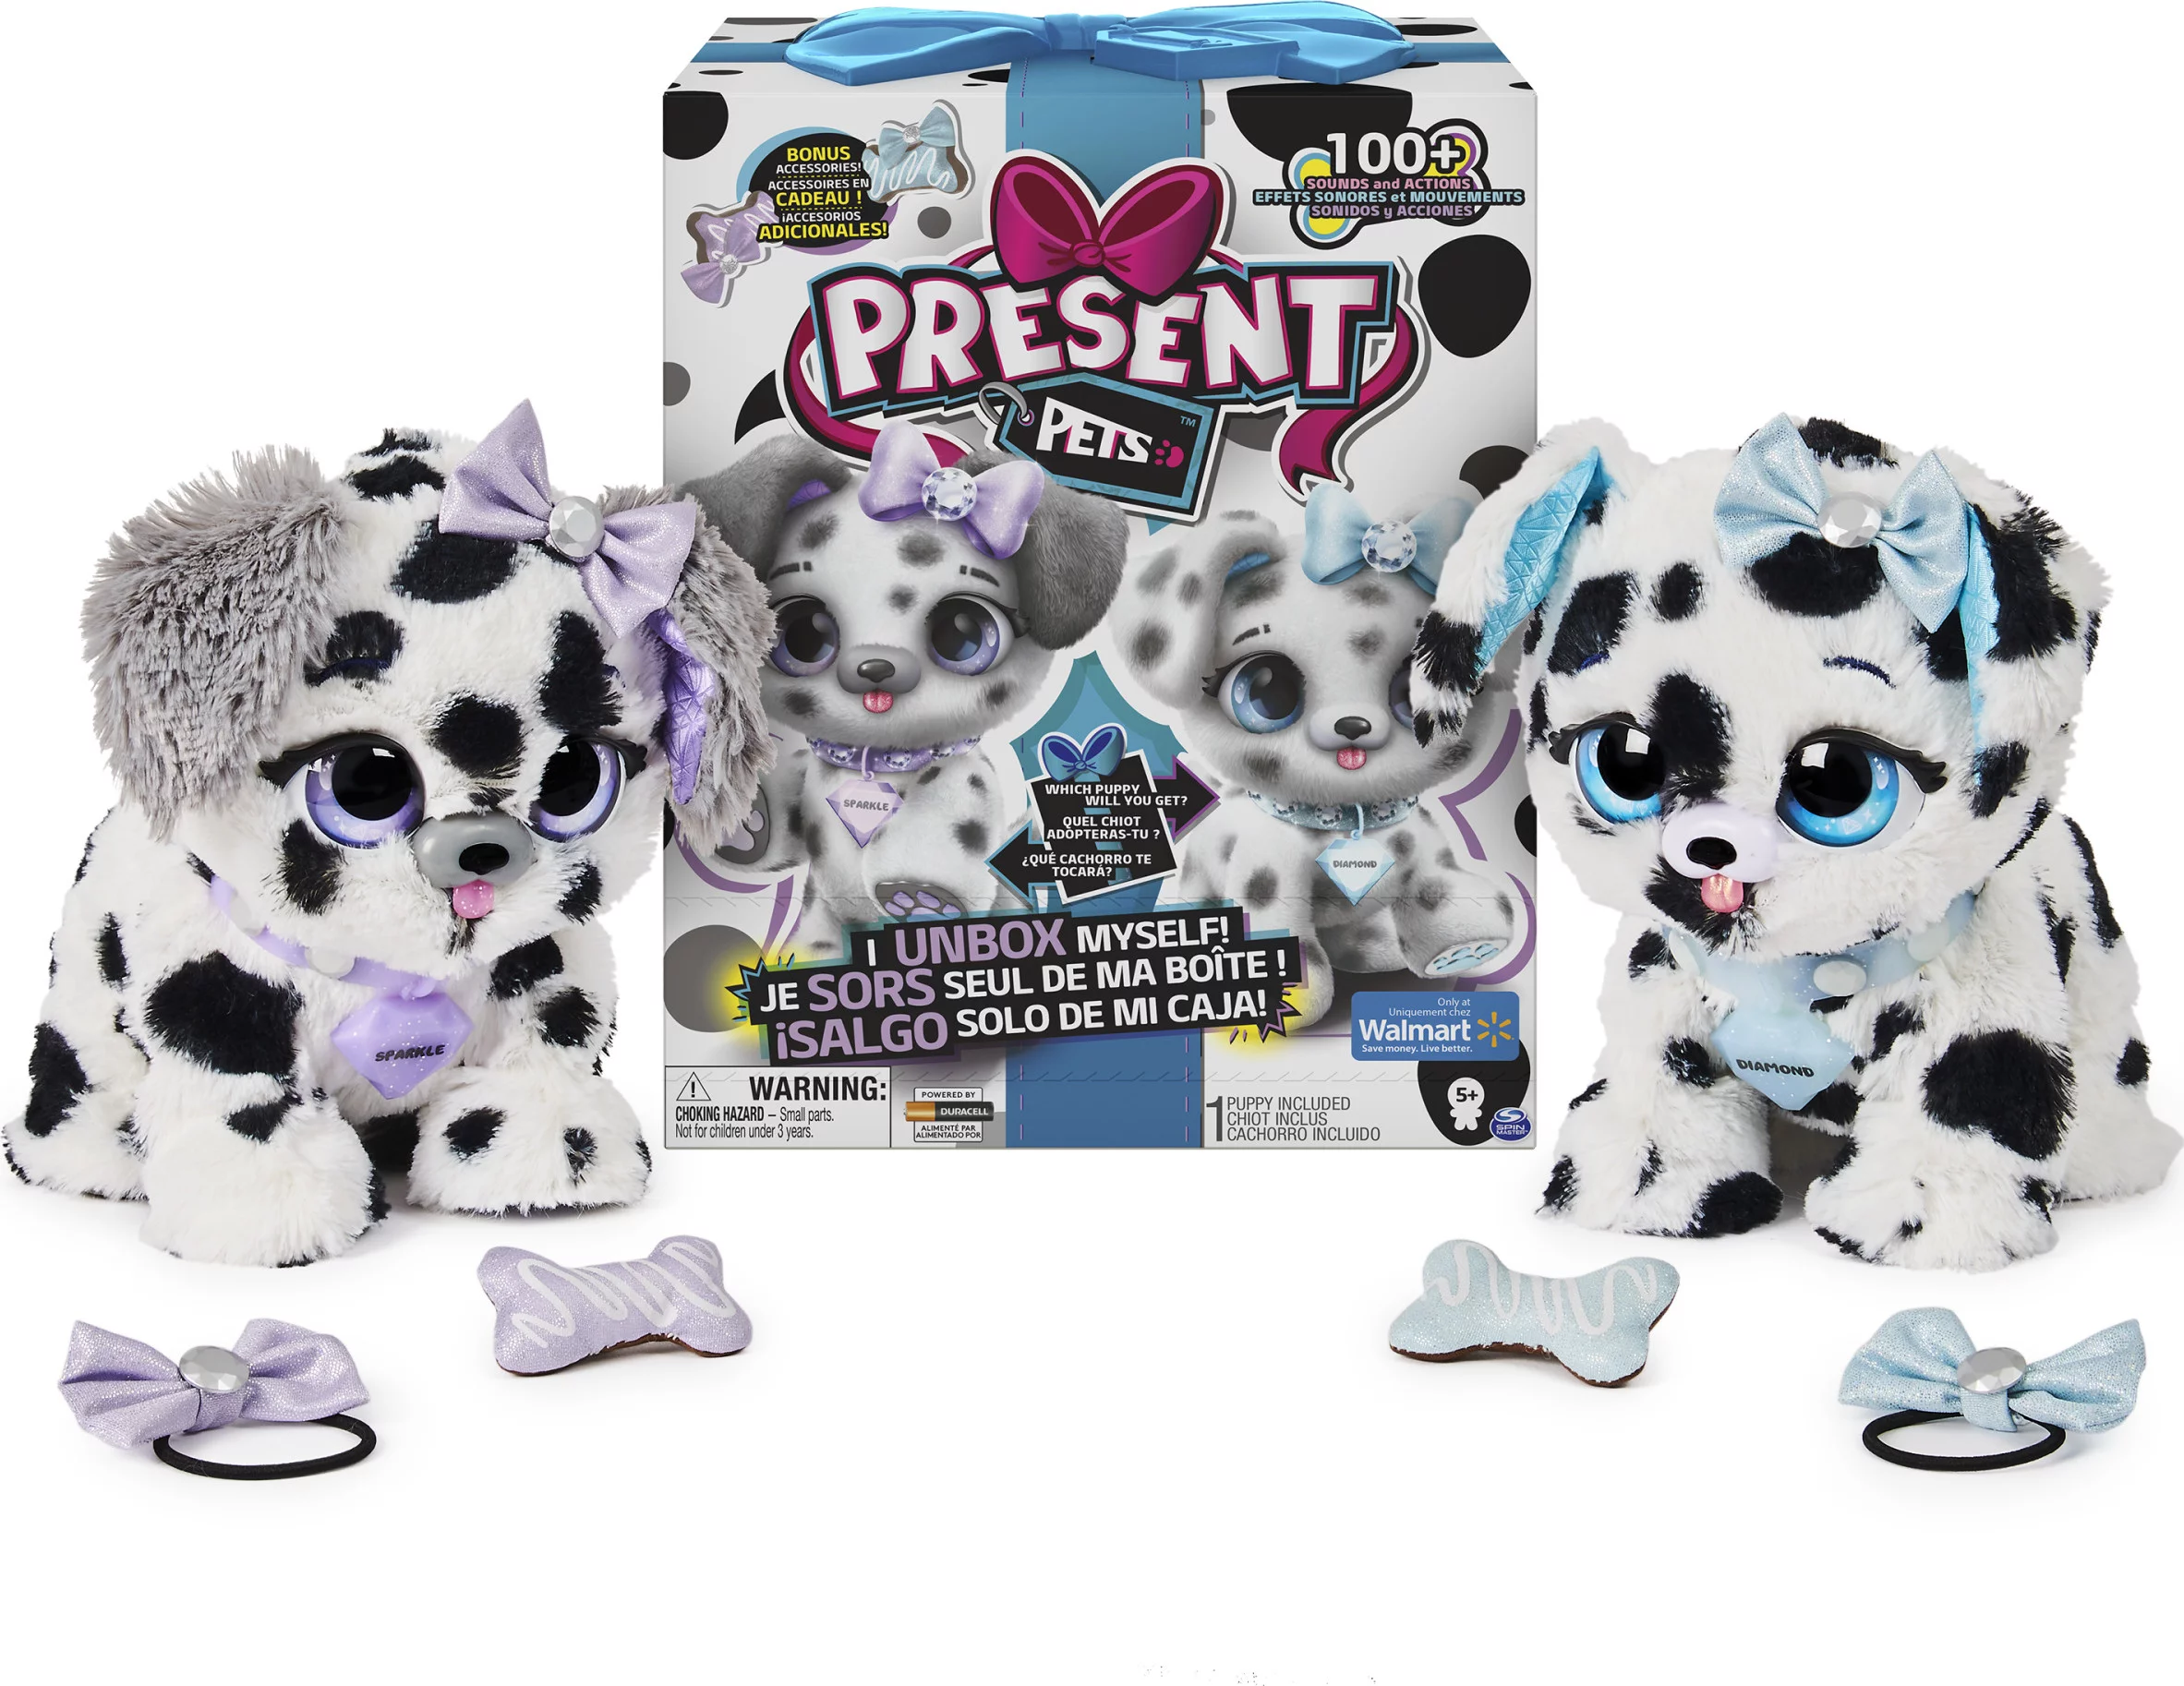 Present Pets Surprise Toy Unboxing Review Sparkle or Diamond Walmart Exclusive Version